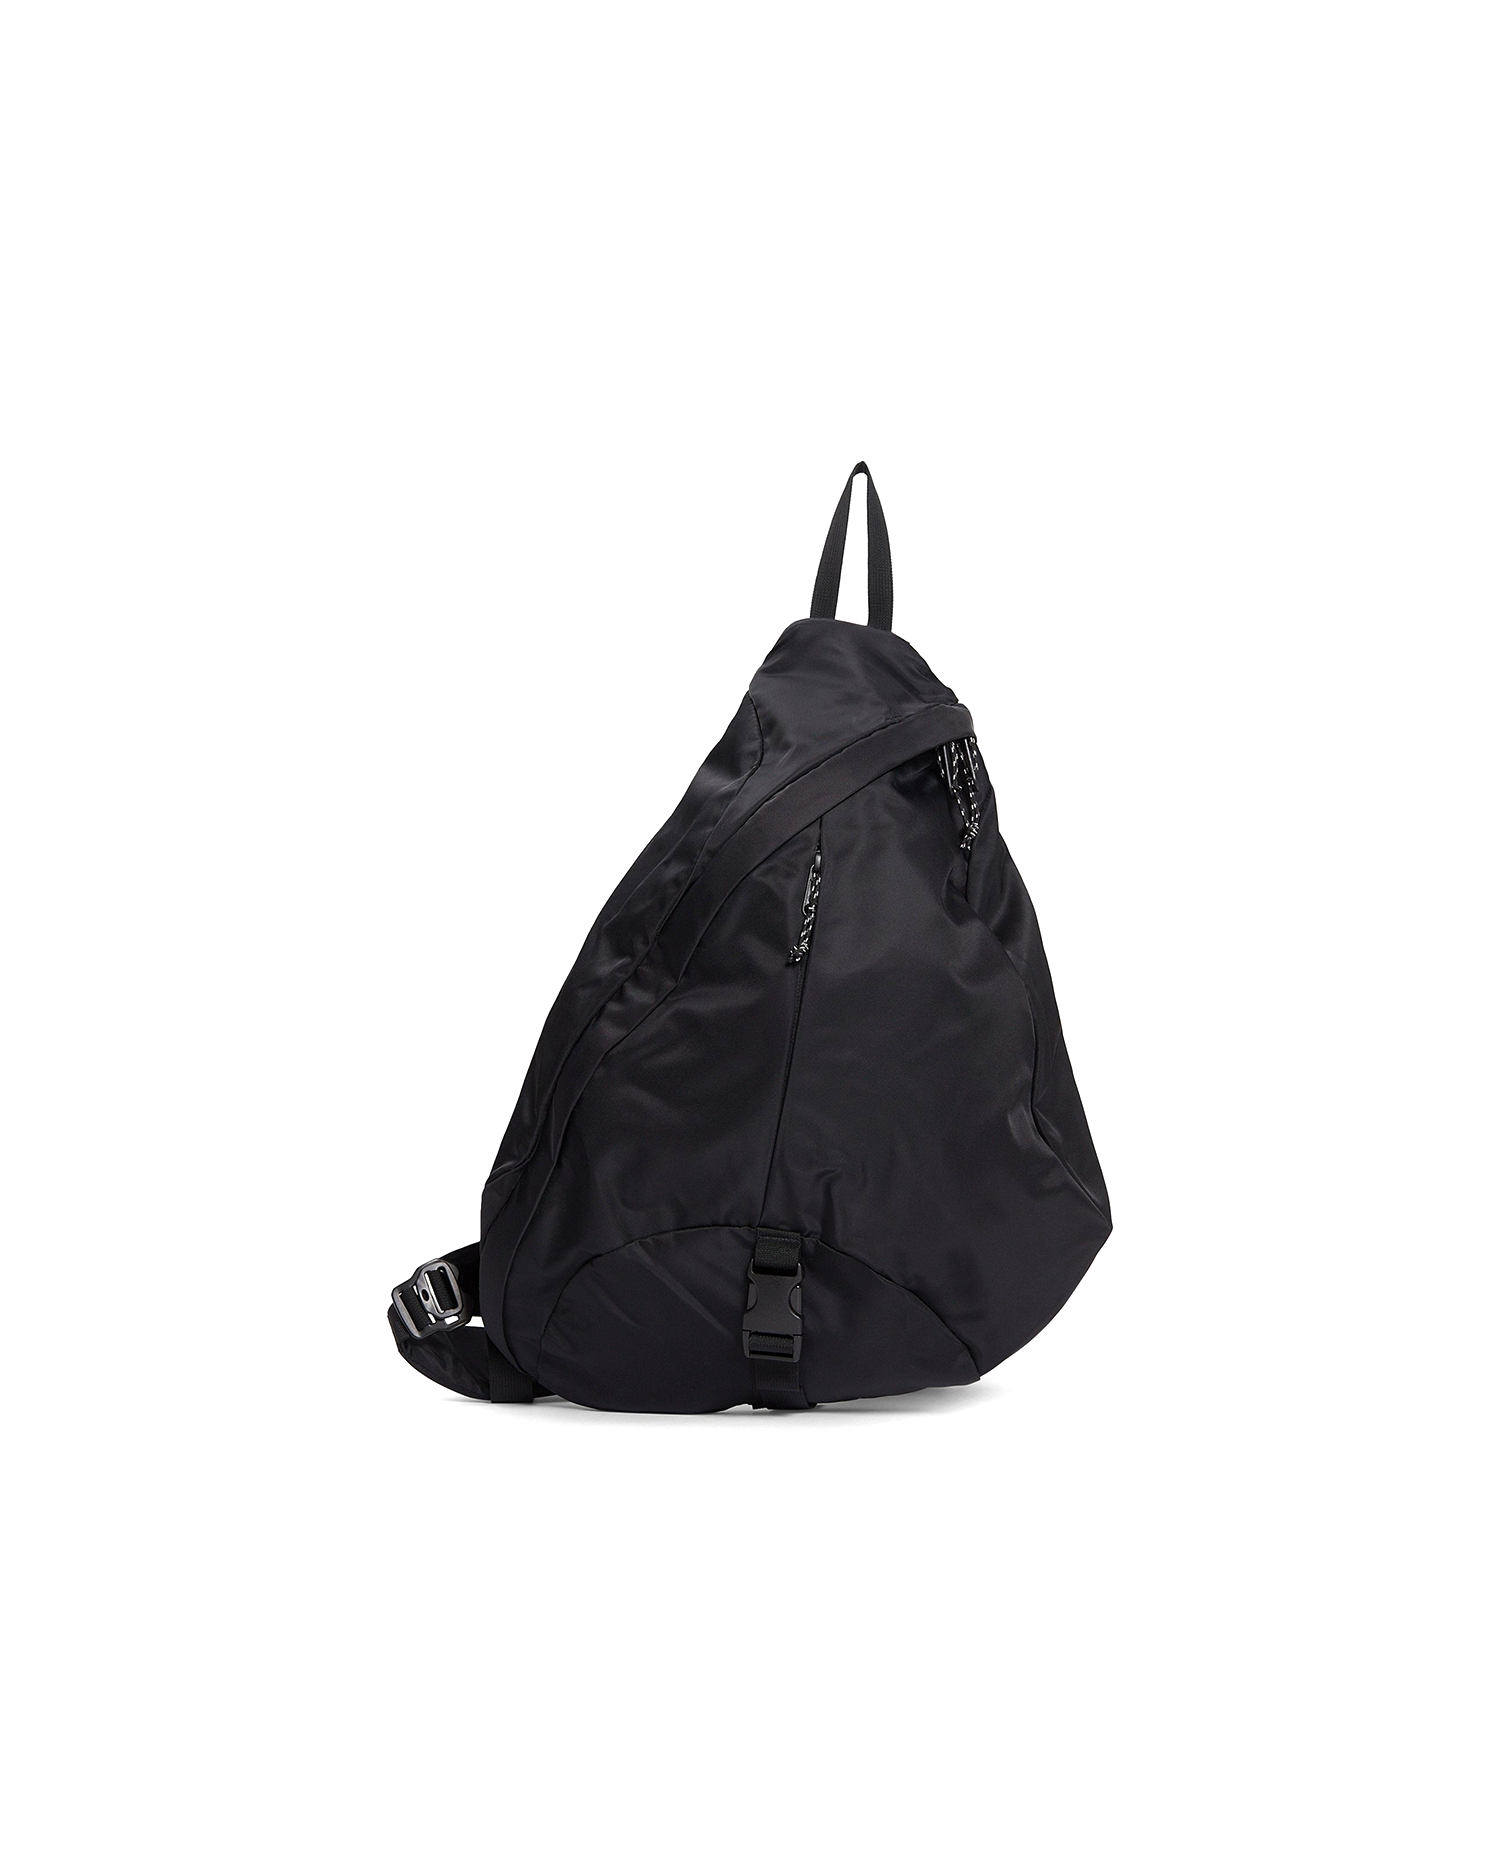 Tri-Point Bag - Black